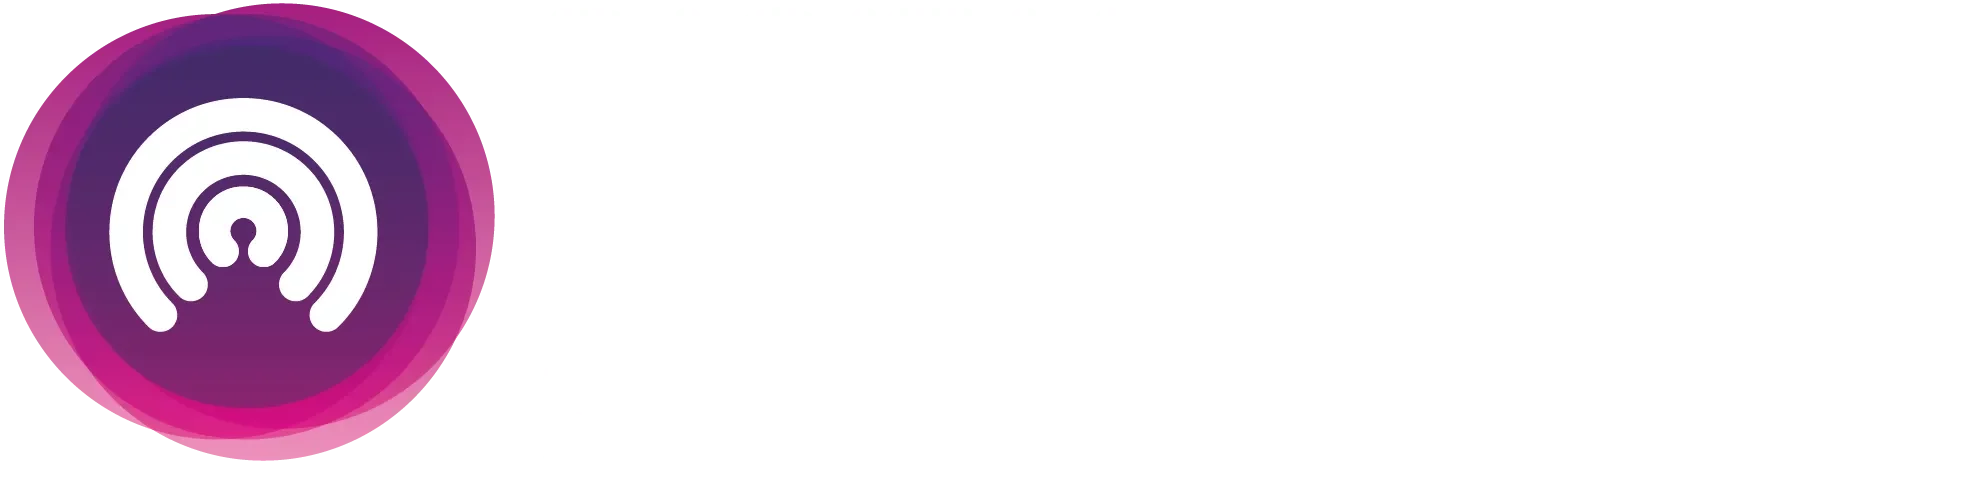 Digital Healthcare Show 2024